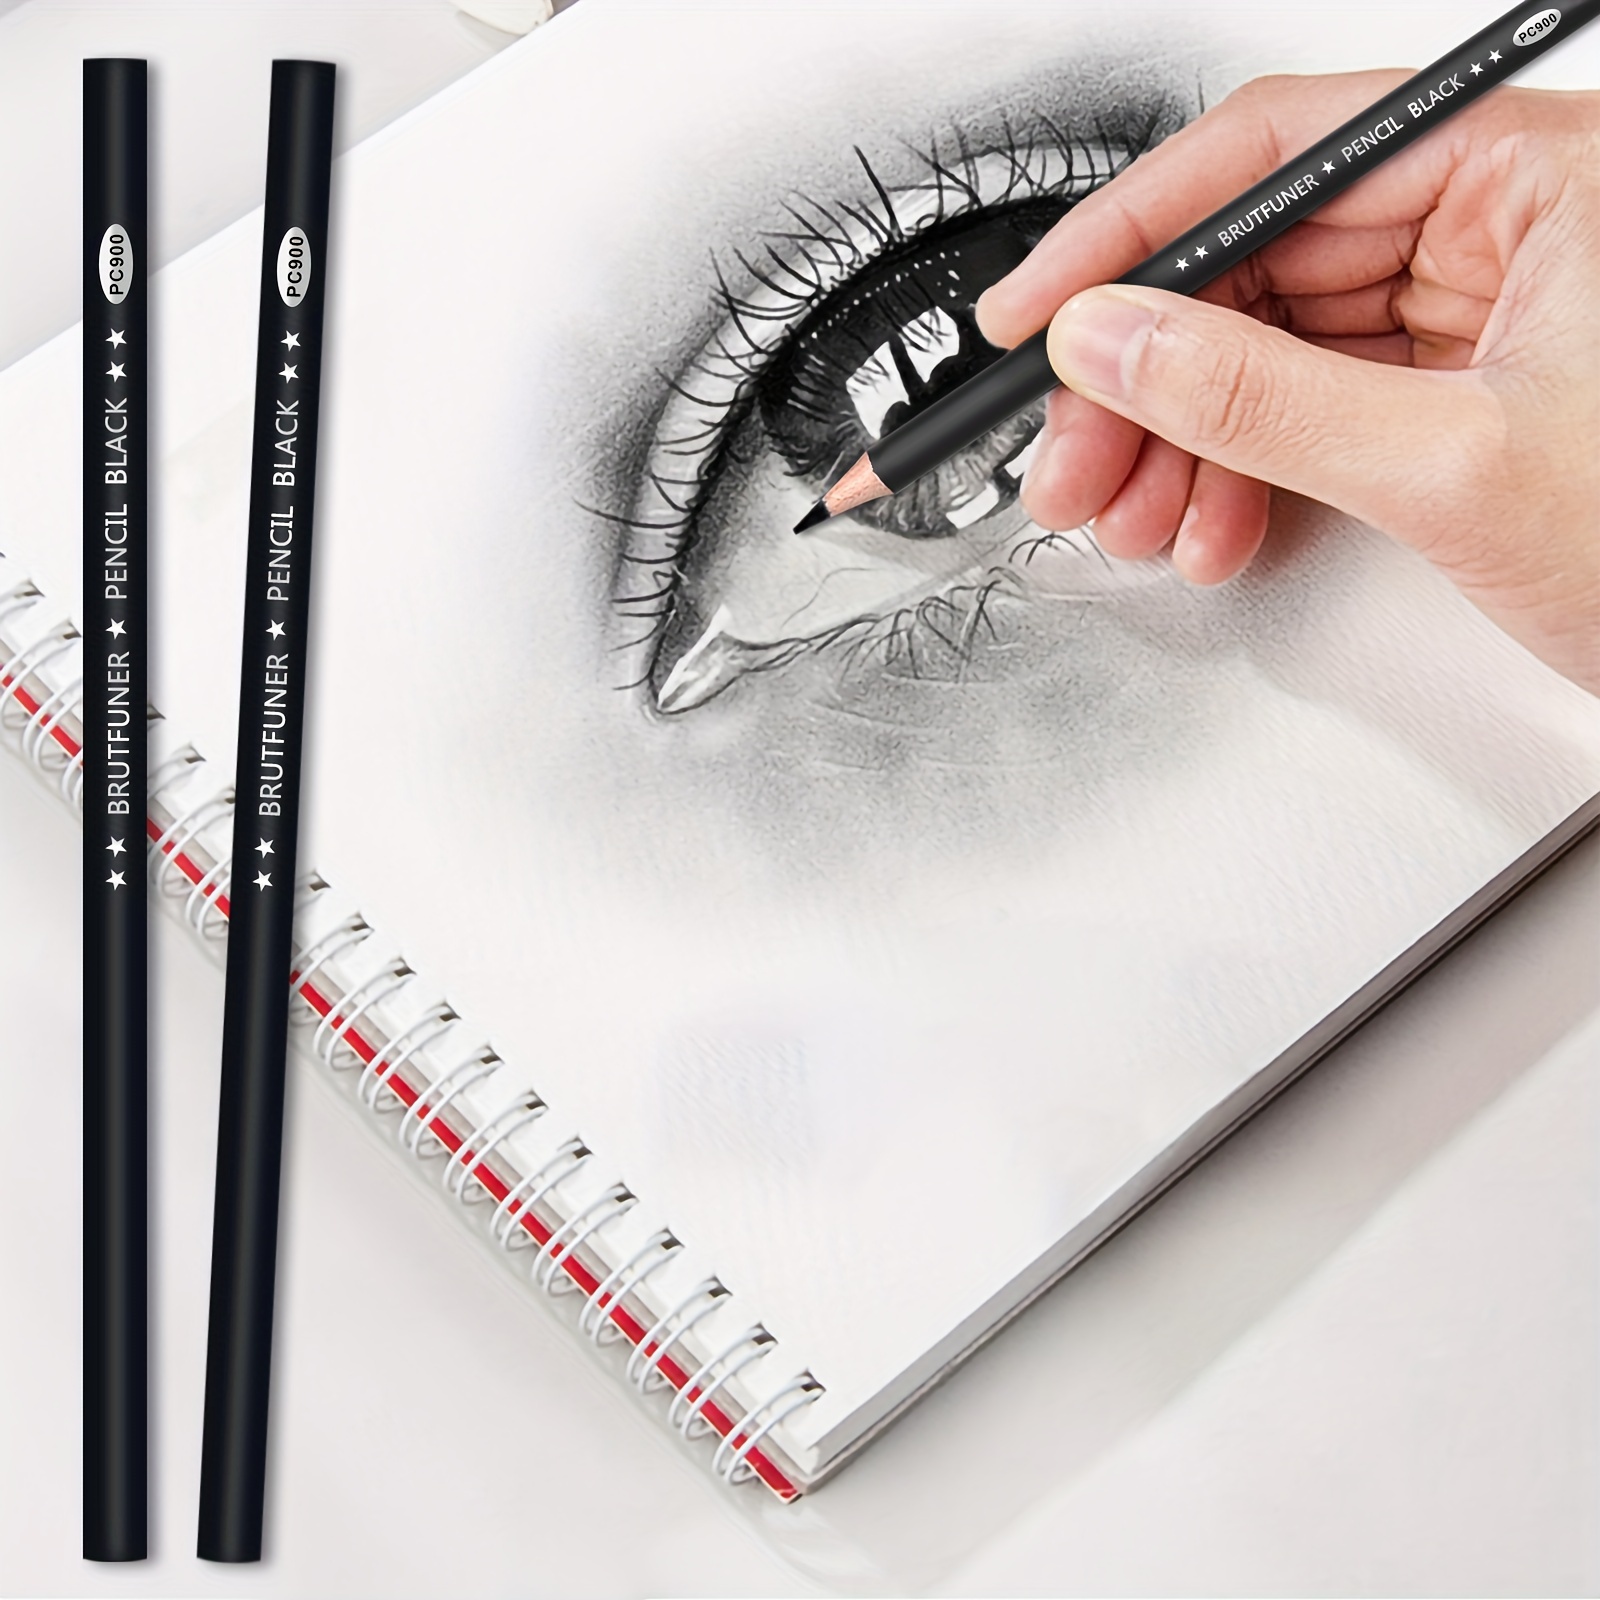 https://img.kwcdn.com/product/professional-high-quality-sketching-highlights-artist-pencils/d69d2f15w98k18-588f1688/Fancyalgo/VirtualModelMatting/57b8ae51fa0abde14a15fd5a932e9e00.jpg